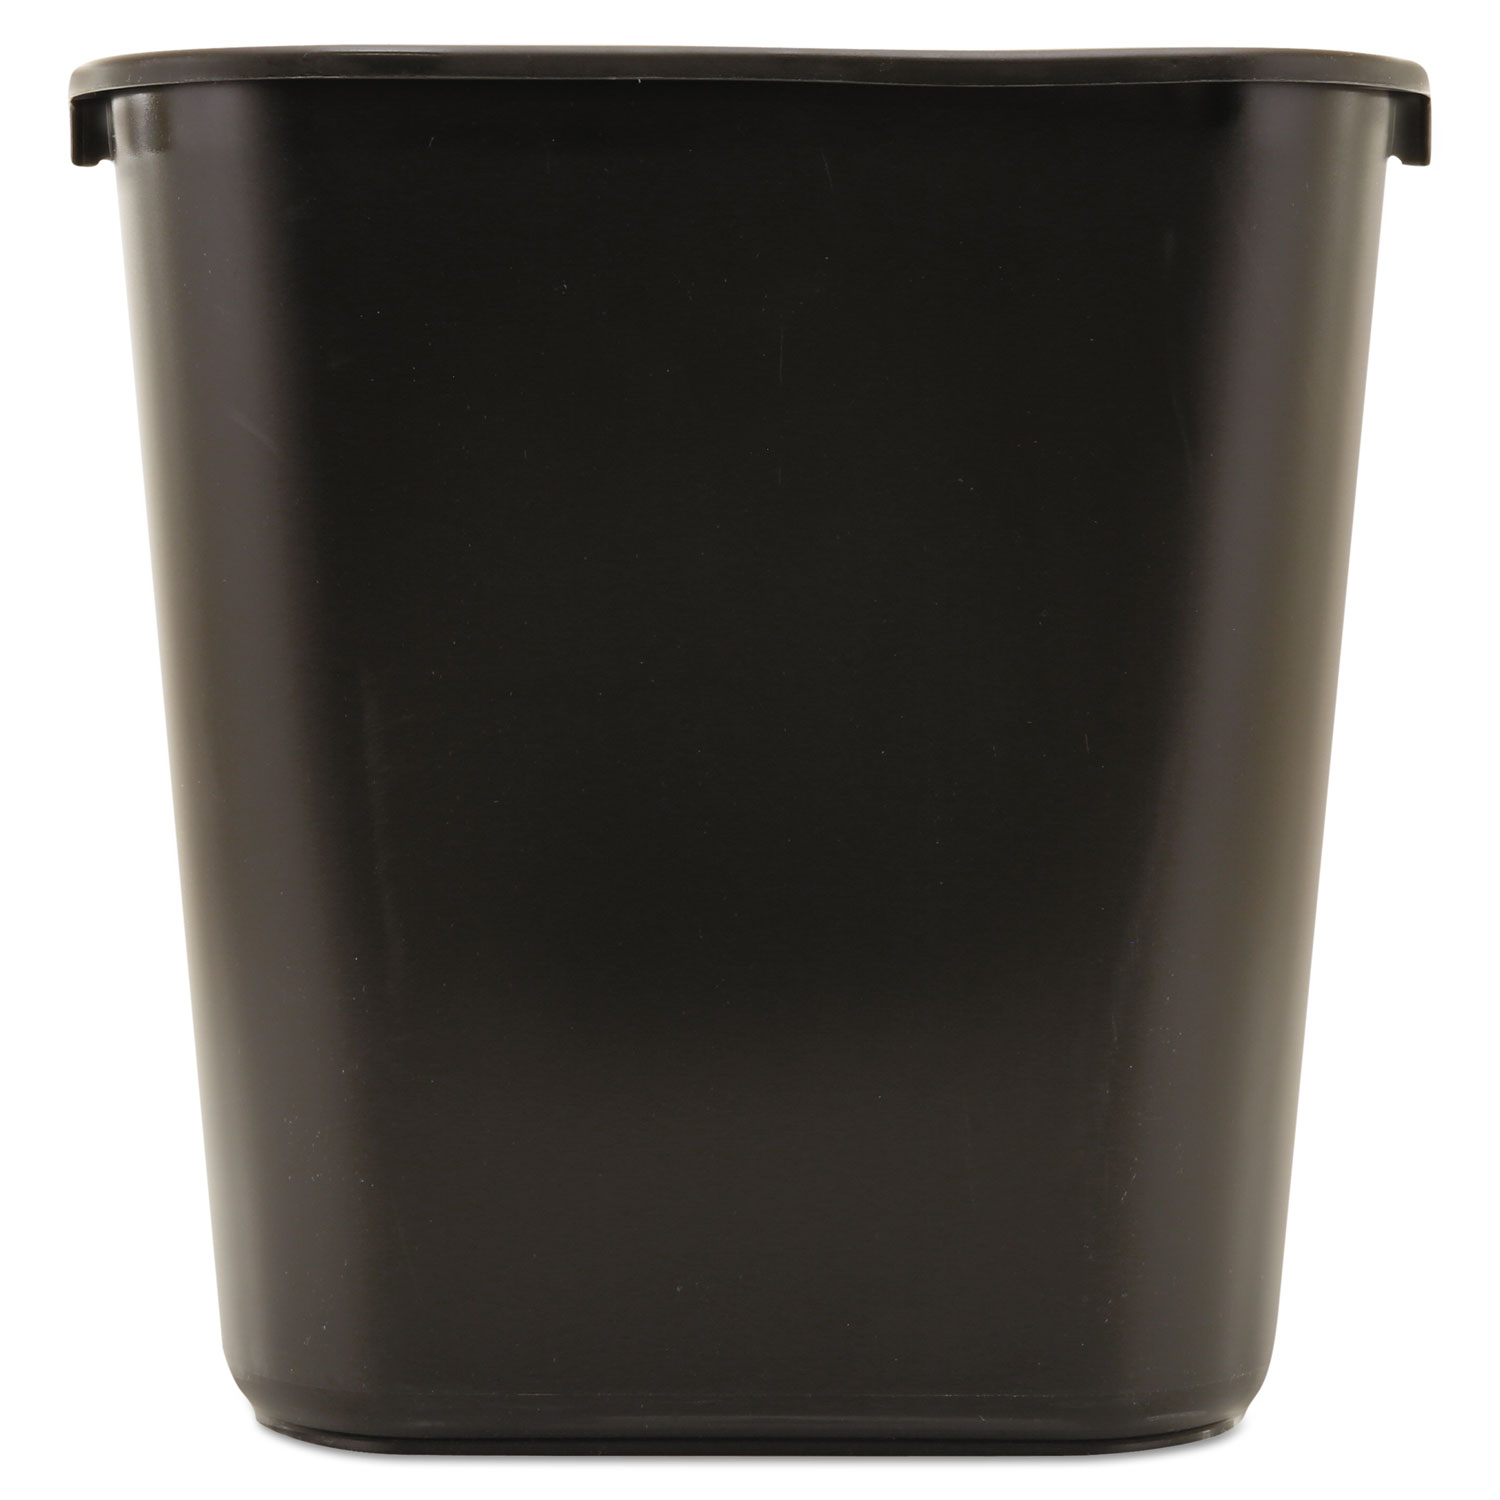 Rubbermaid Deskside Plastic Wastebasket - Rectangular, 7 gallons, Black, 12/Case